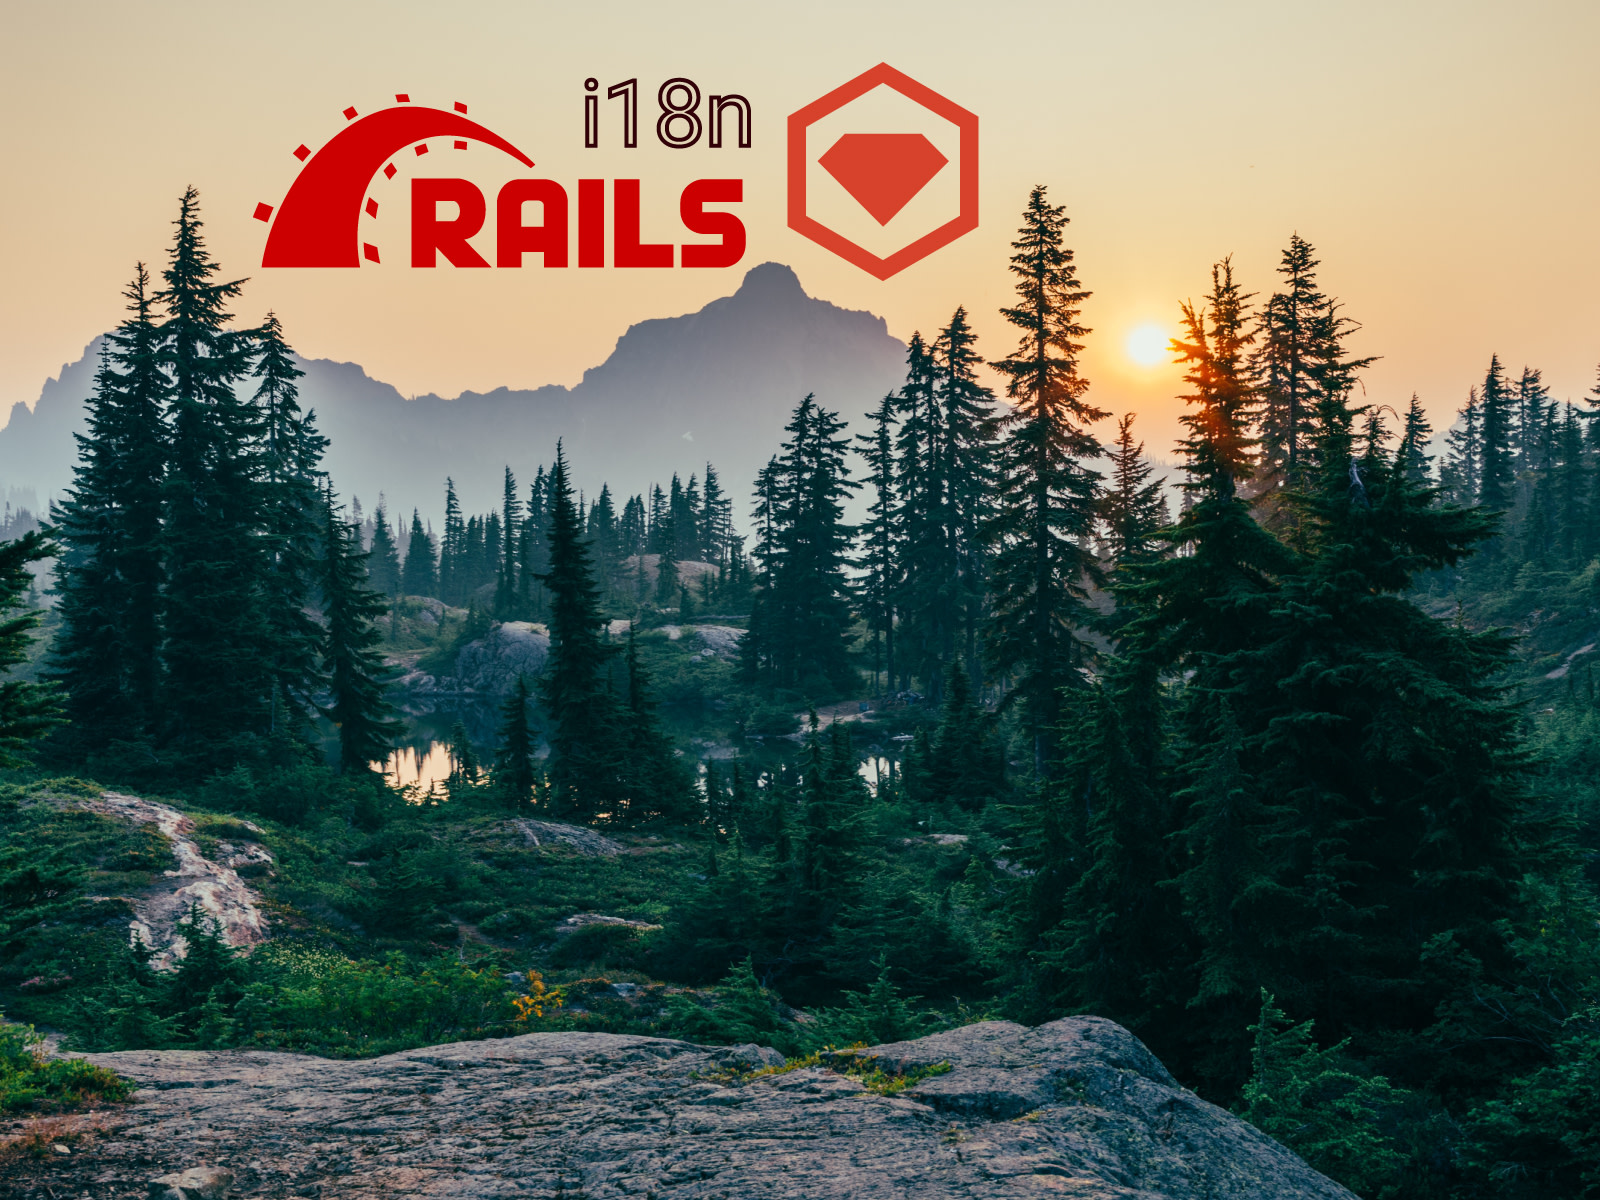 Blog post image with i18n Ruby on Rails logo